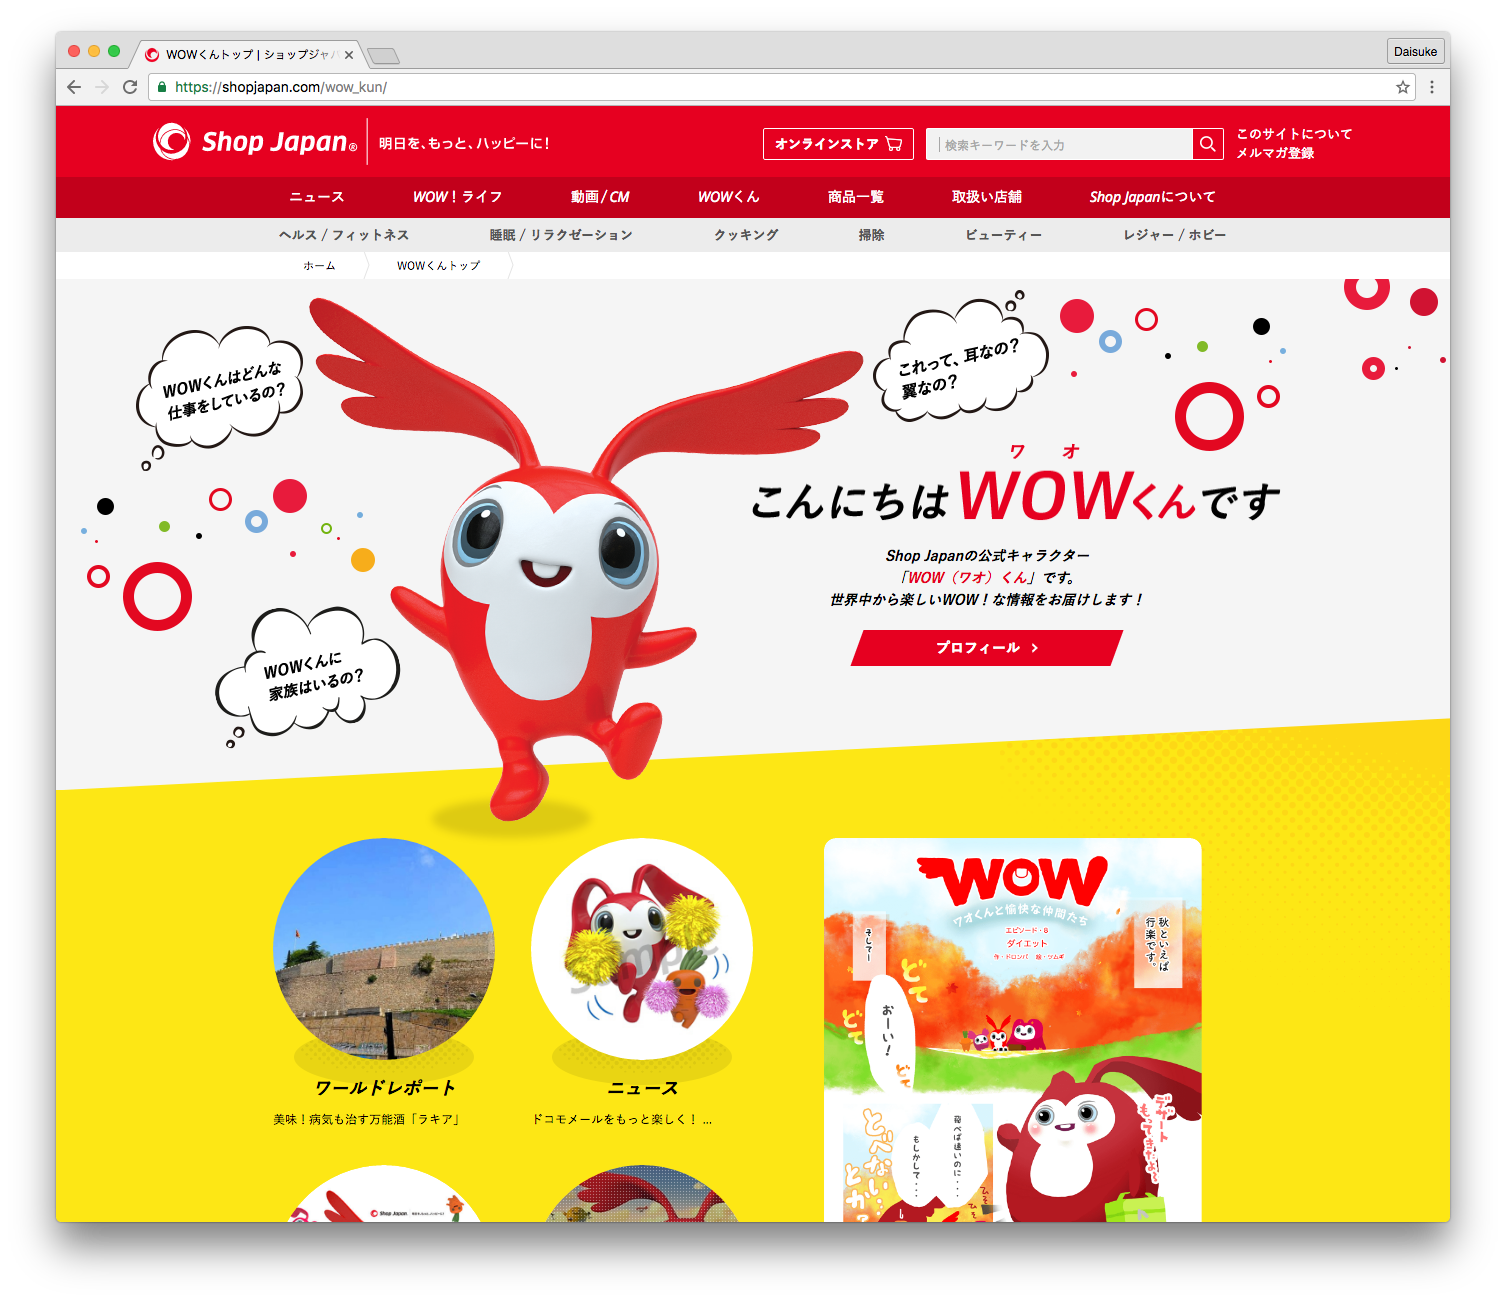 Brand Mascot Design For Shop Japan Daisuke Endo Design Creating Logos Visual Identities